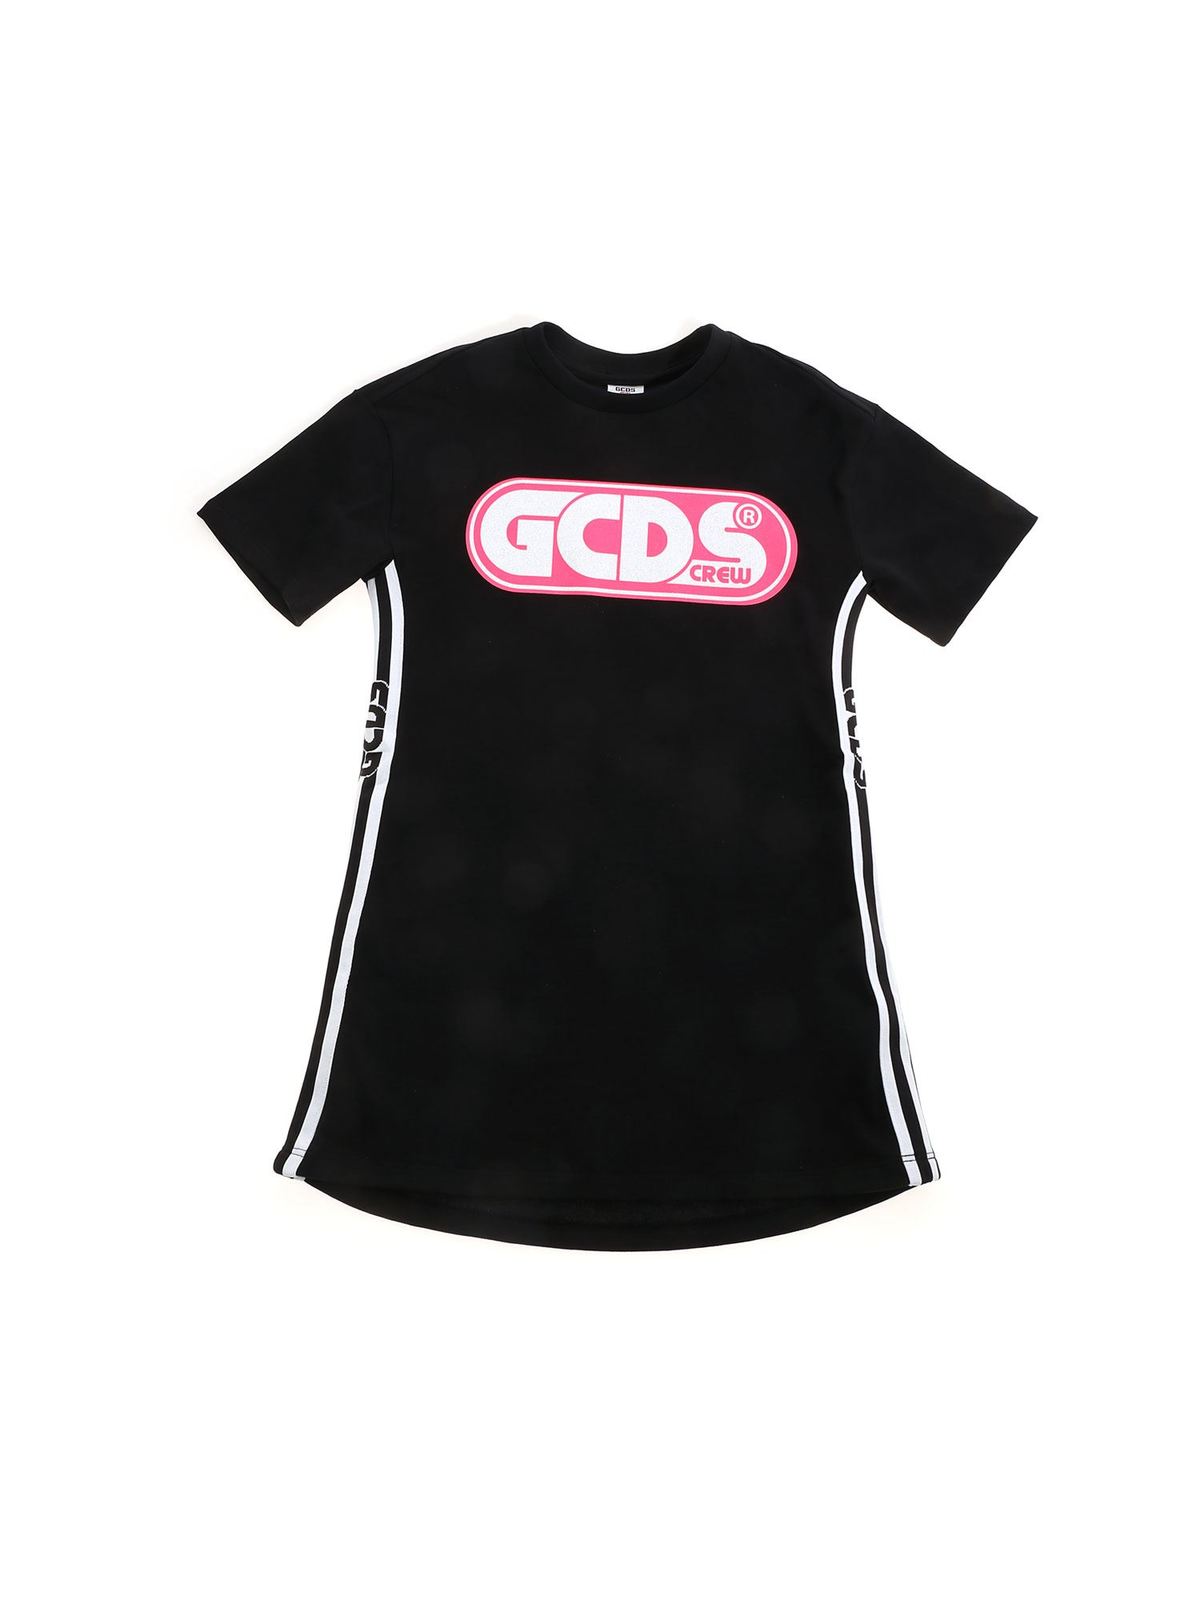 GCDS DRESS T-SHIRT IN BLACK AND FUCHSIA